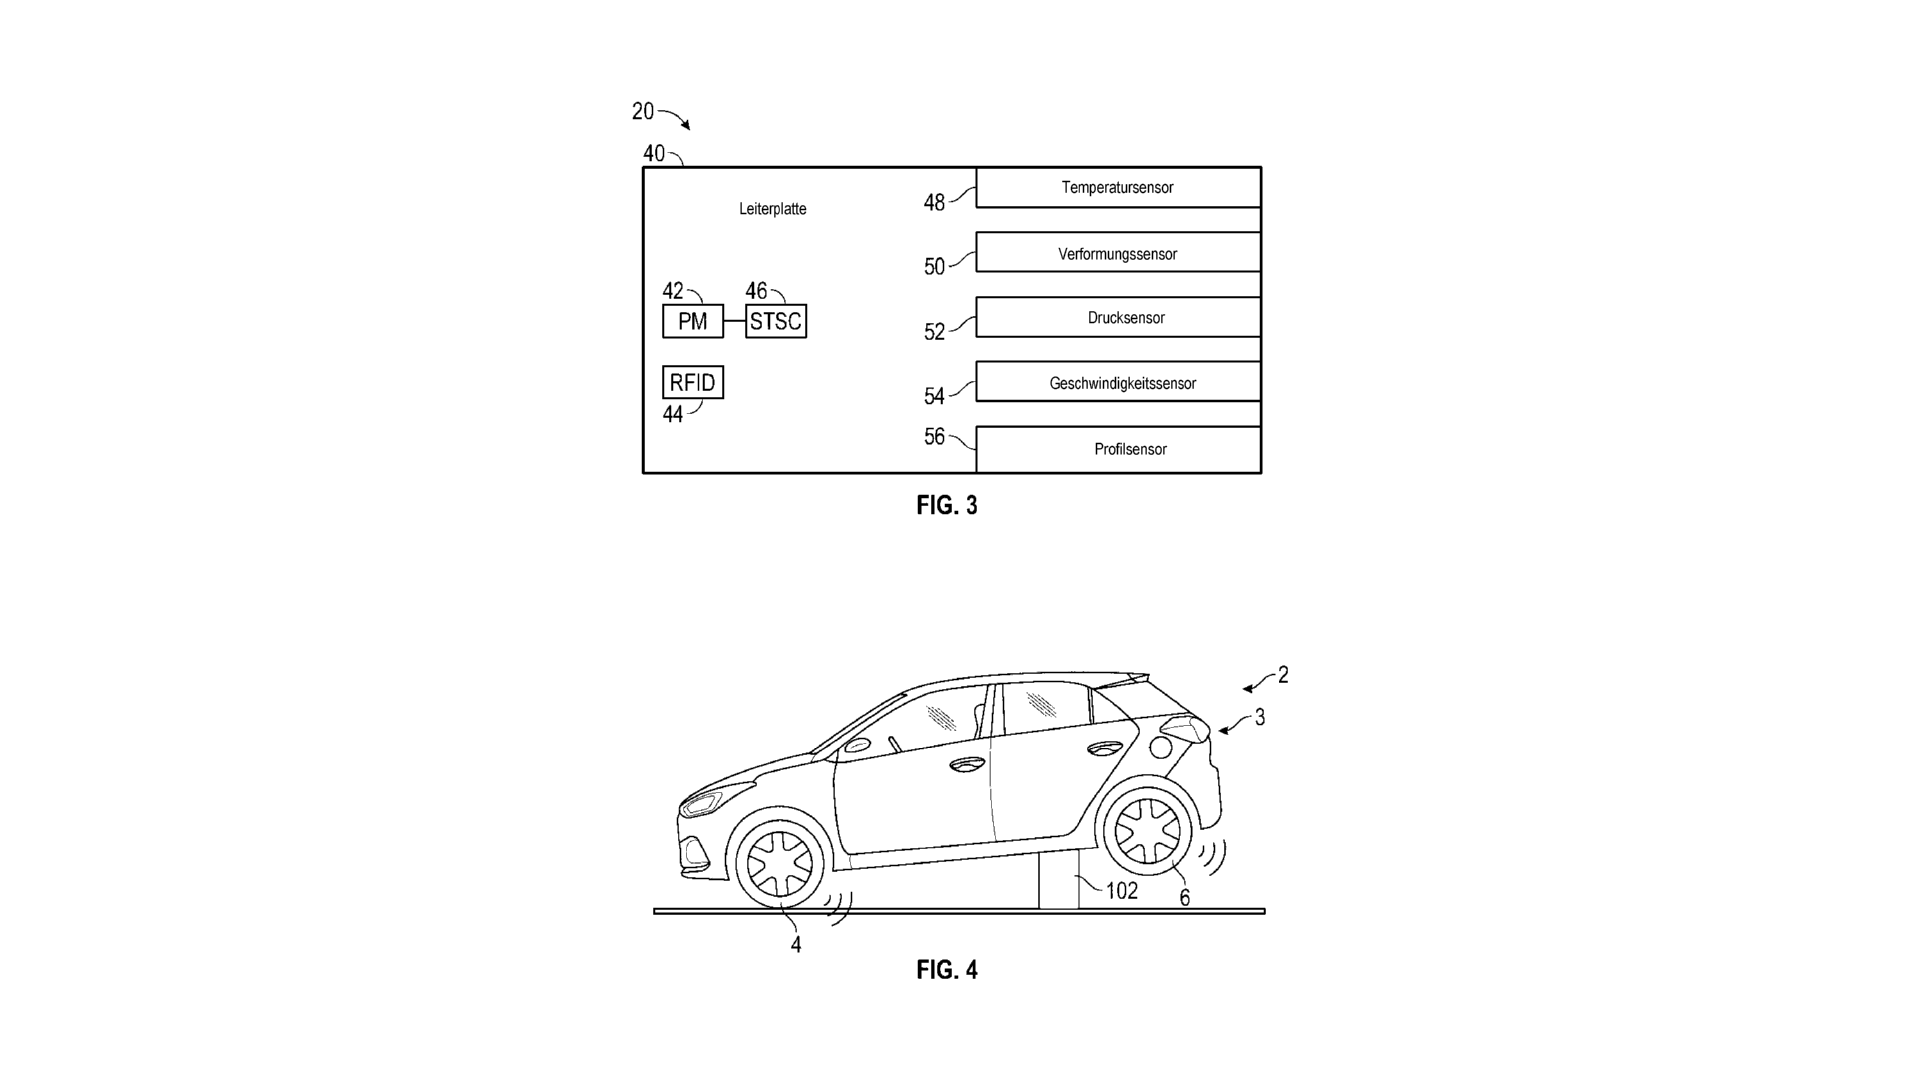 DMPA Ford TPMS Patent Sketch